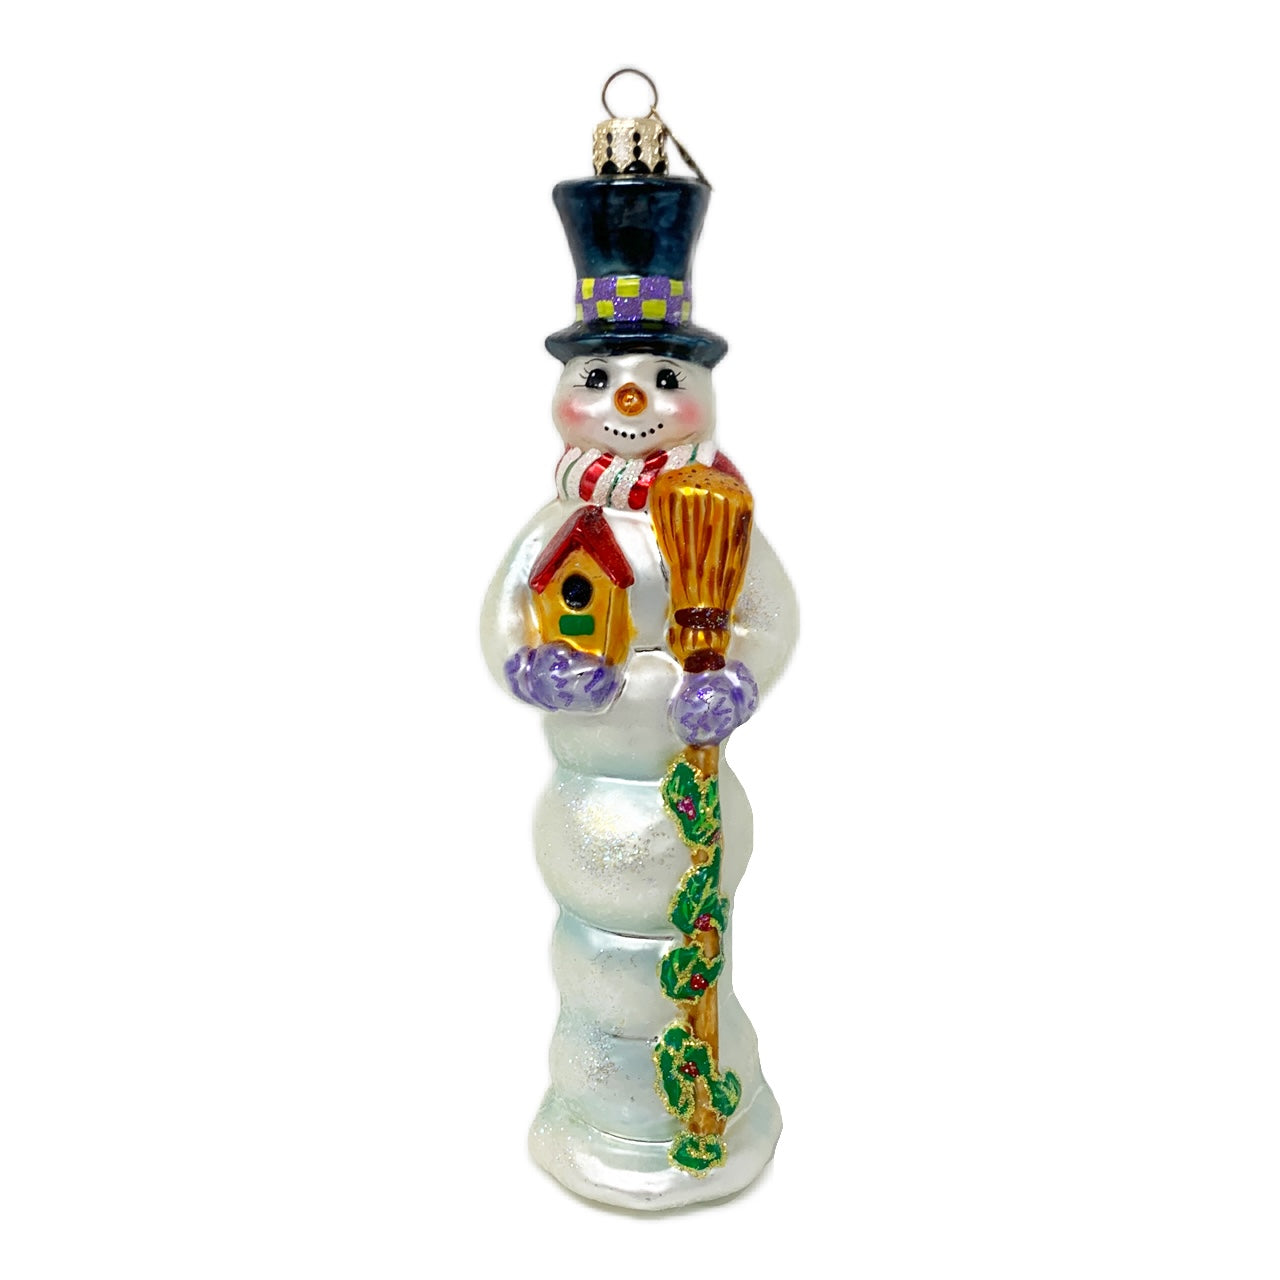 Christopher Radko "Slim Frost" Snowman Christmas Ornament